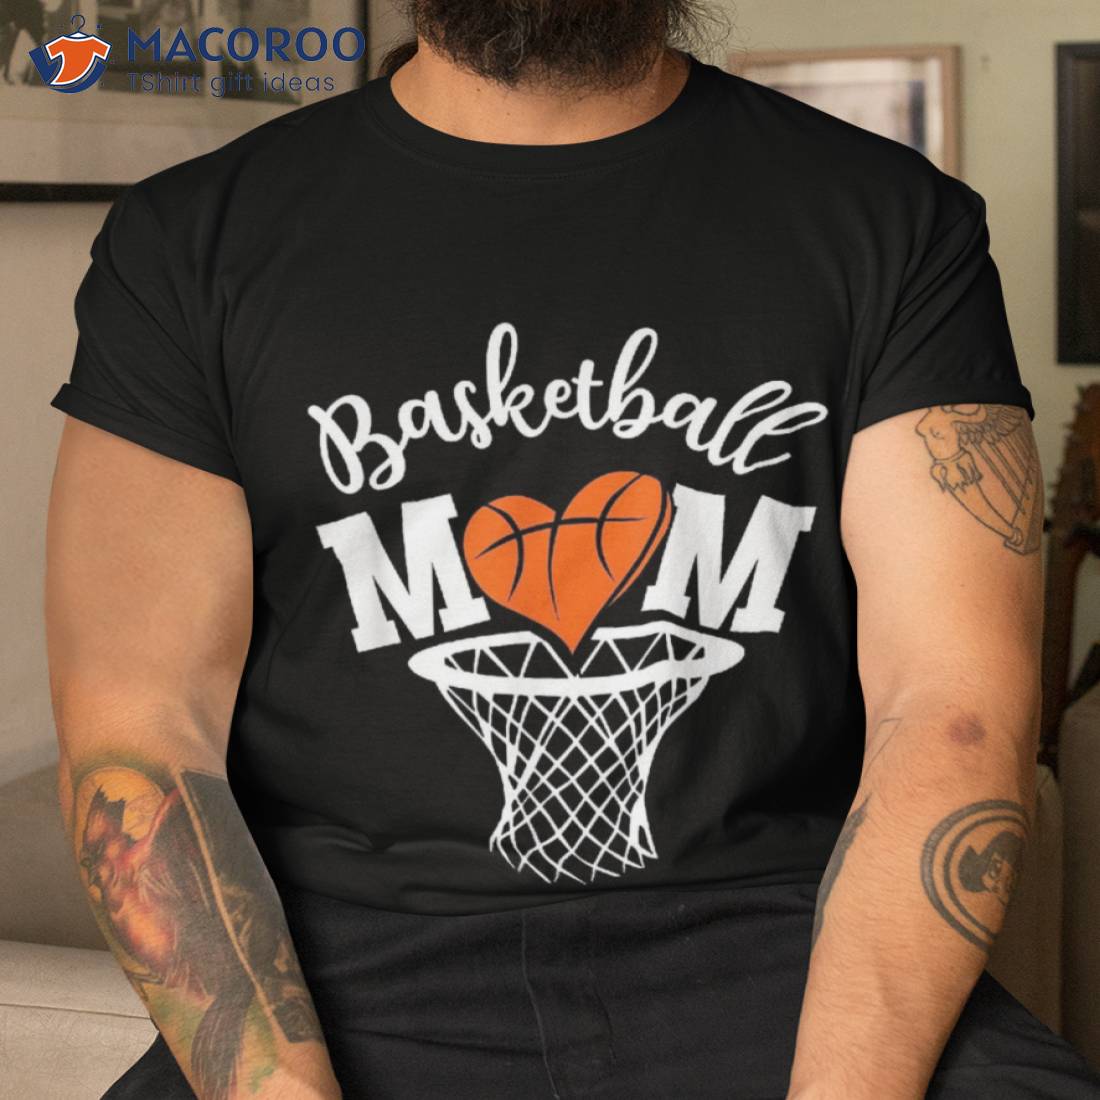 cute basketball mom shirts